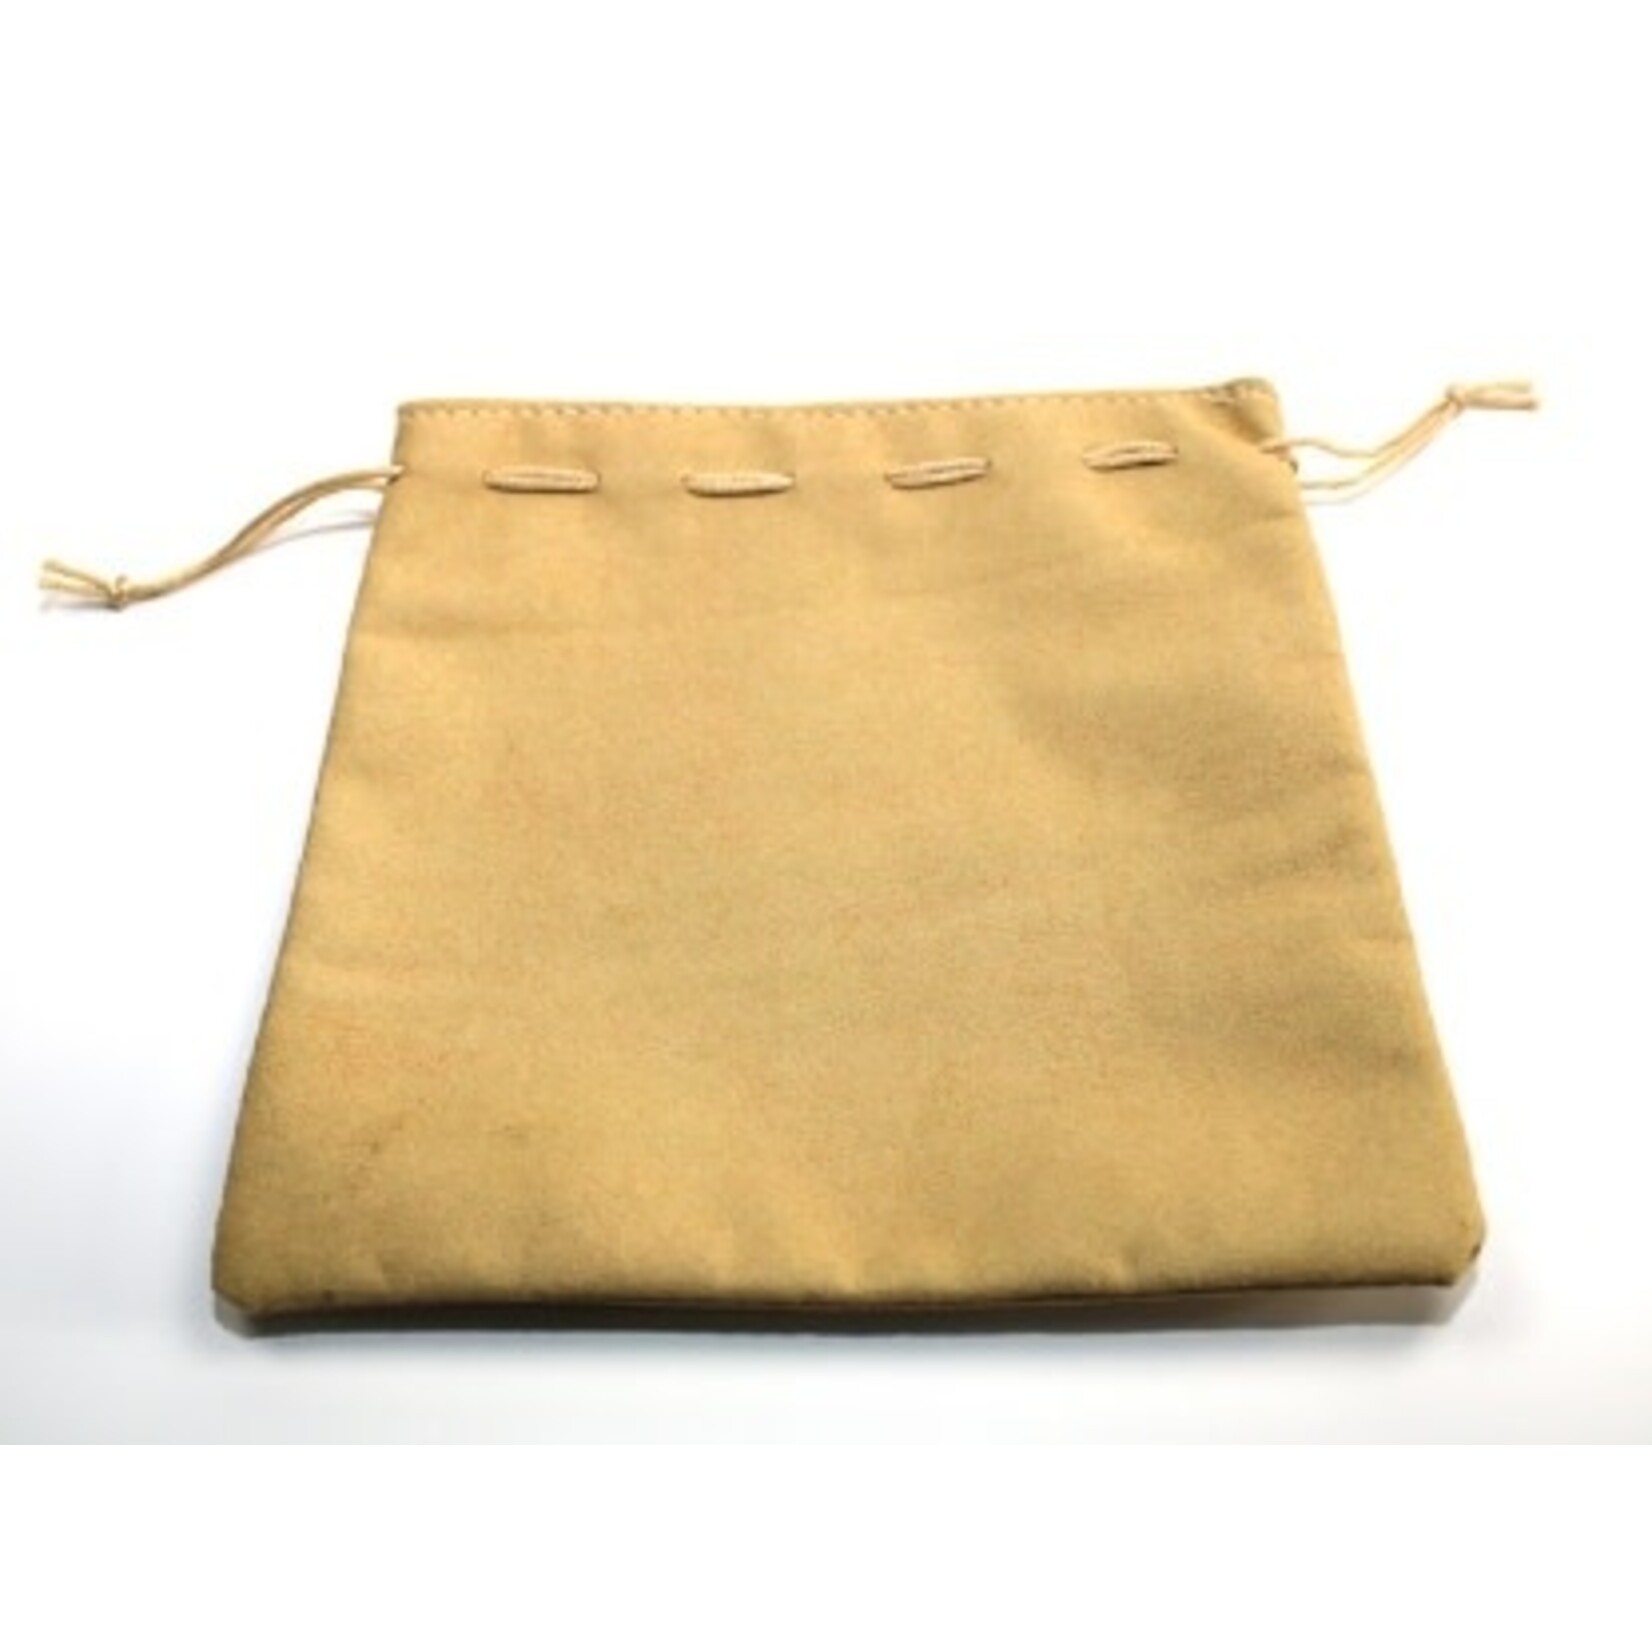 Koplow Games 7" x 8" Leather Bag Tan